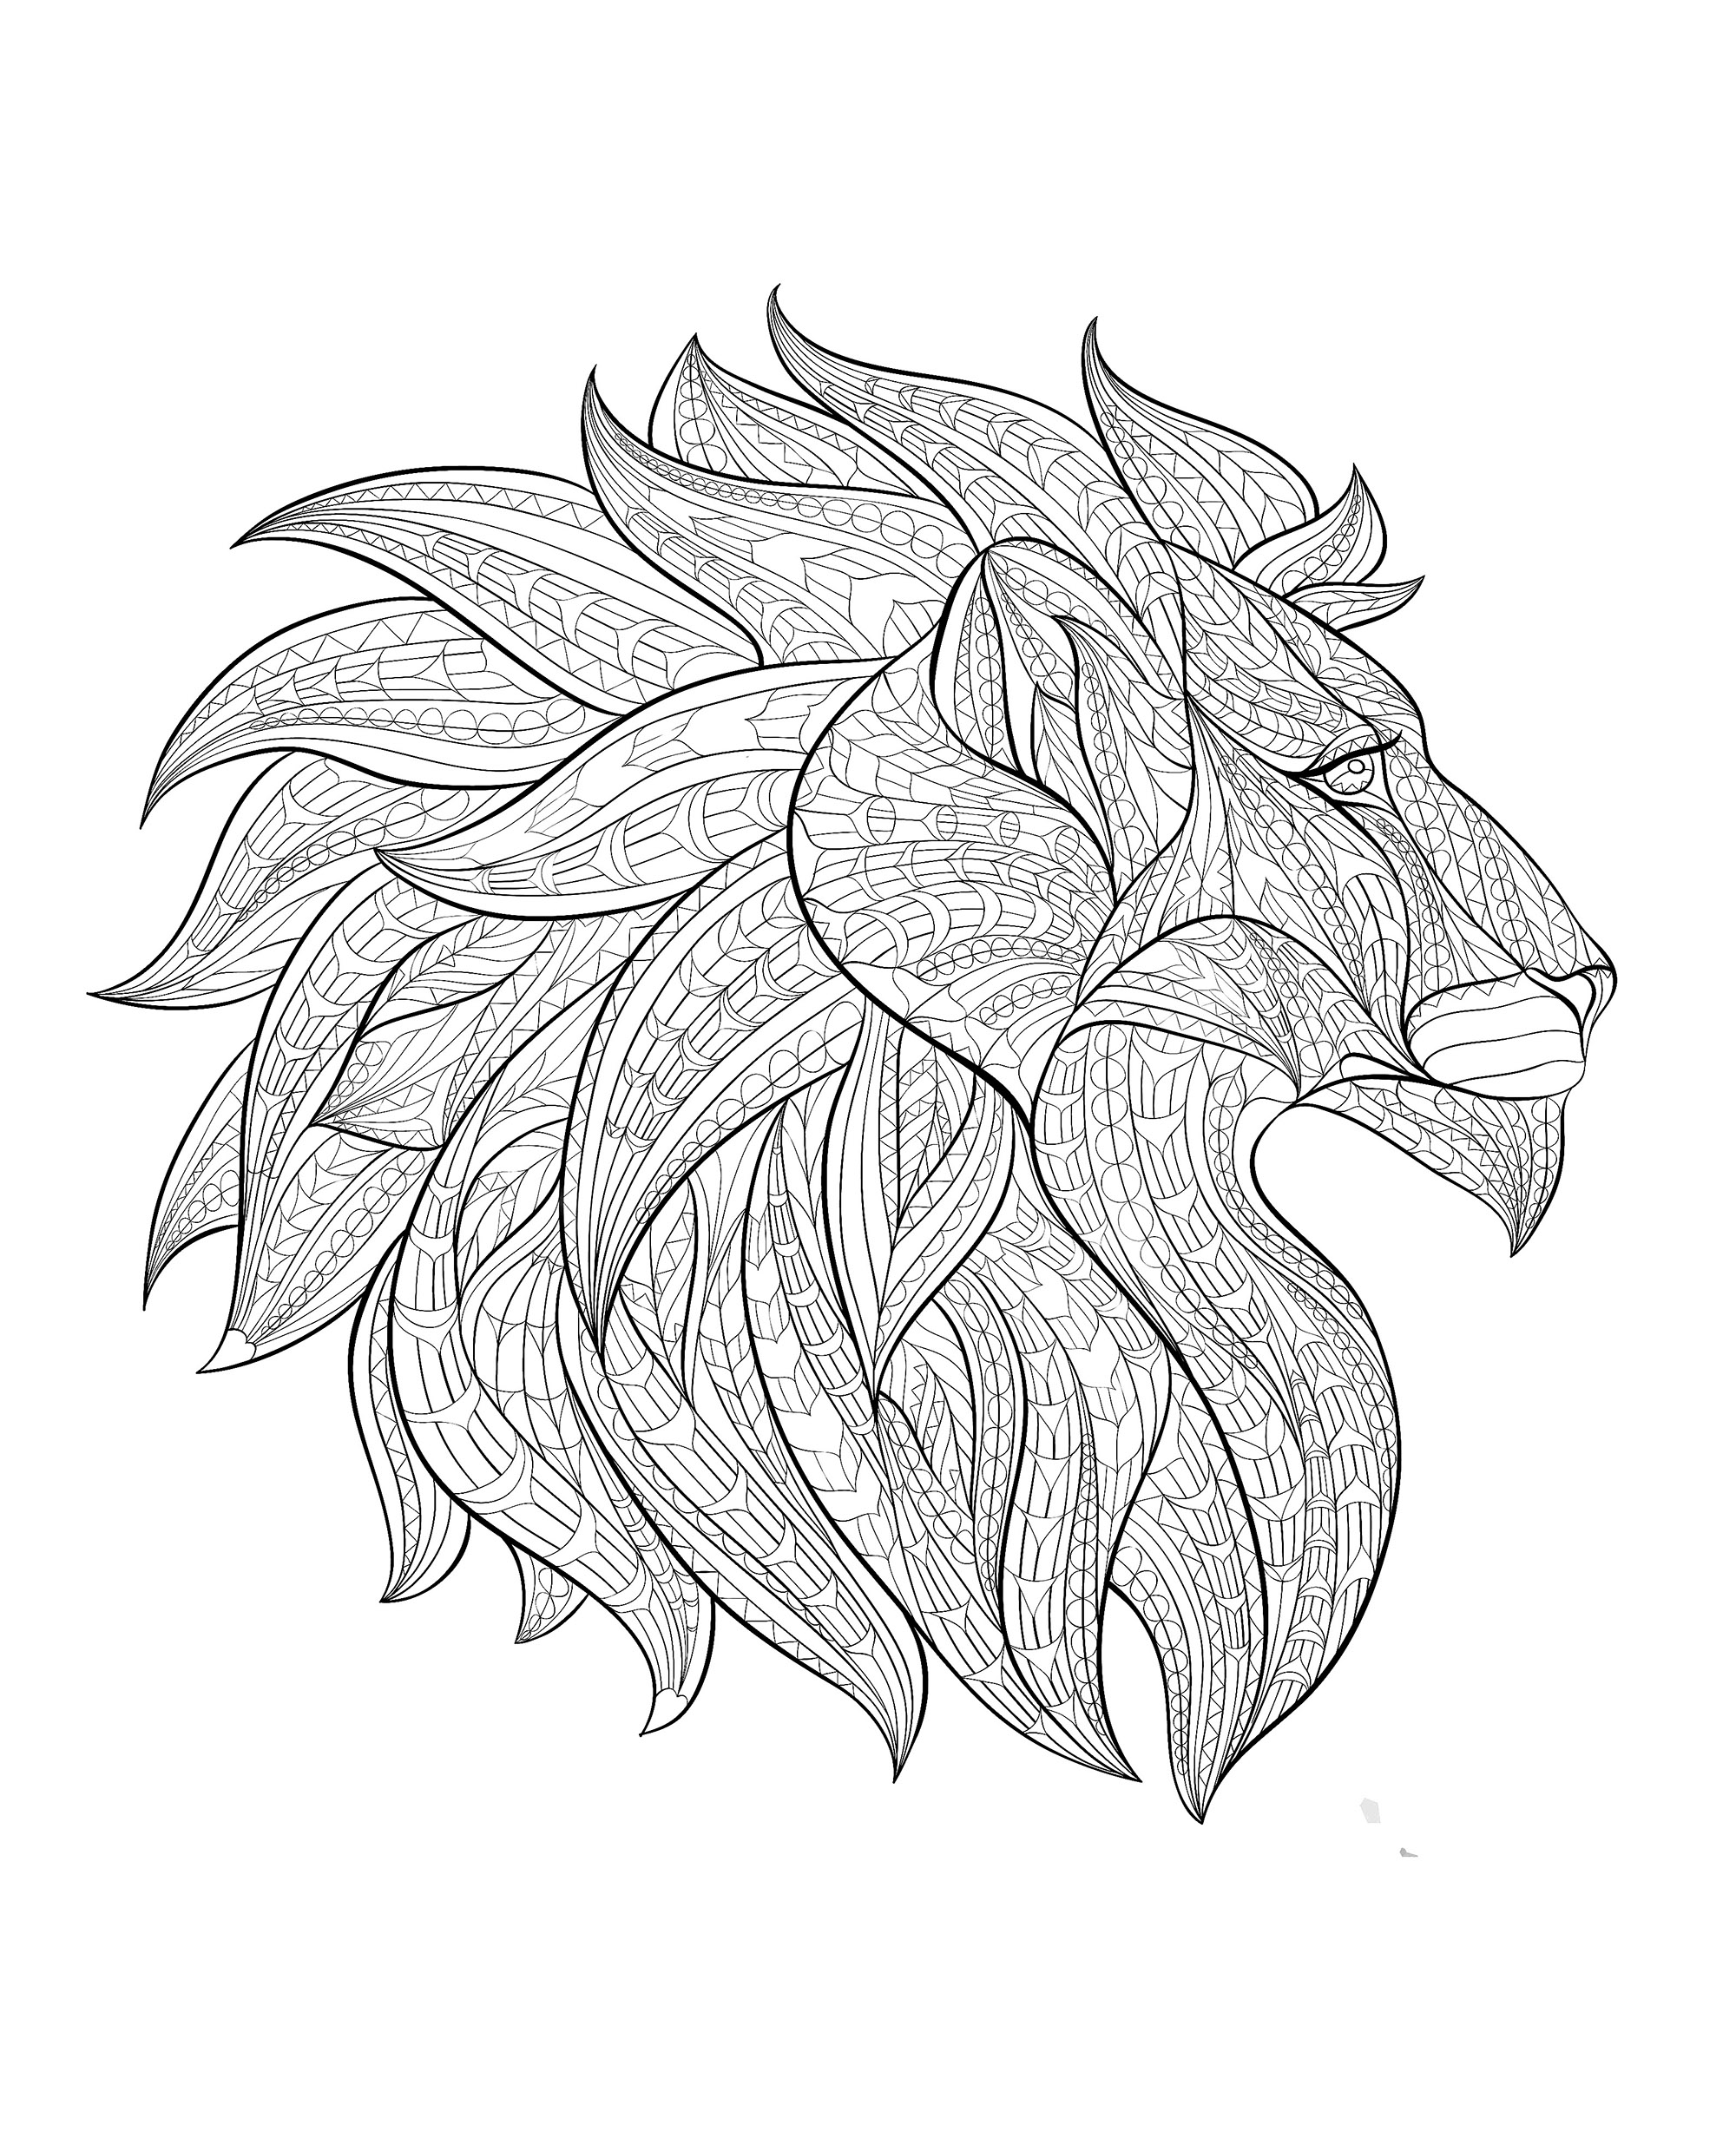 Lion head profile